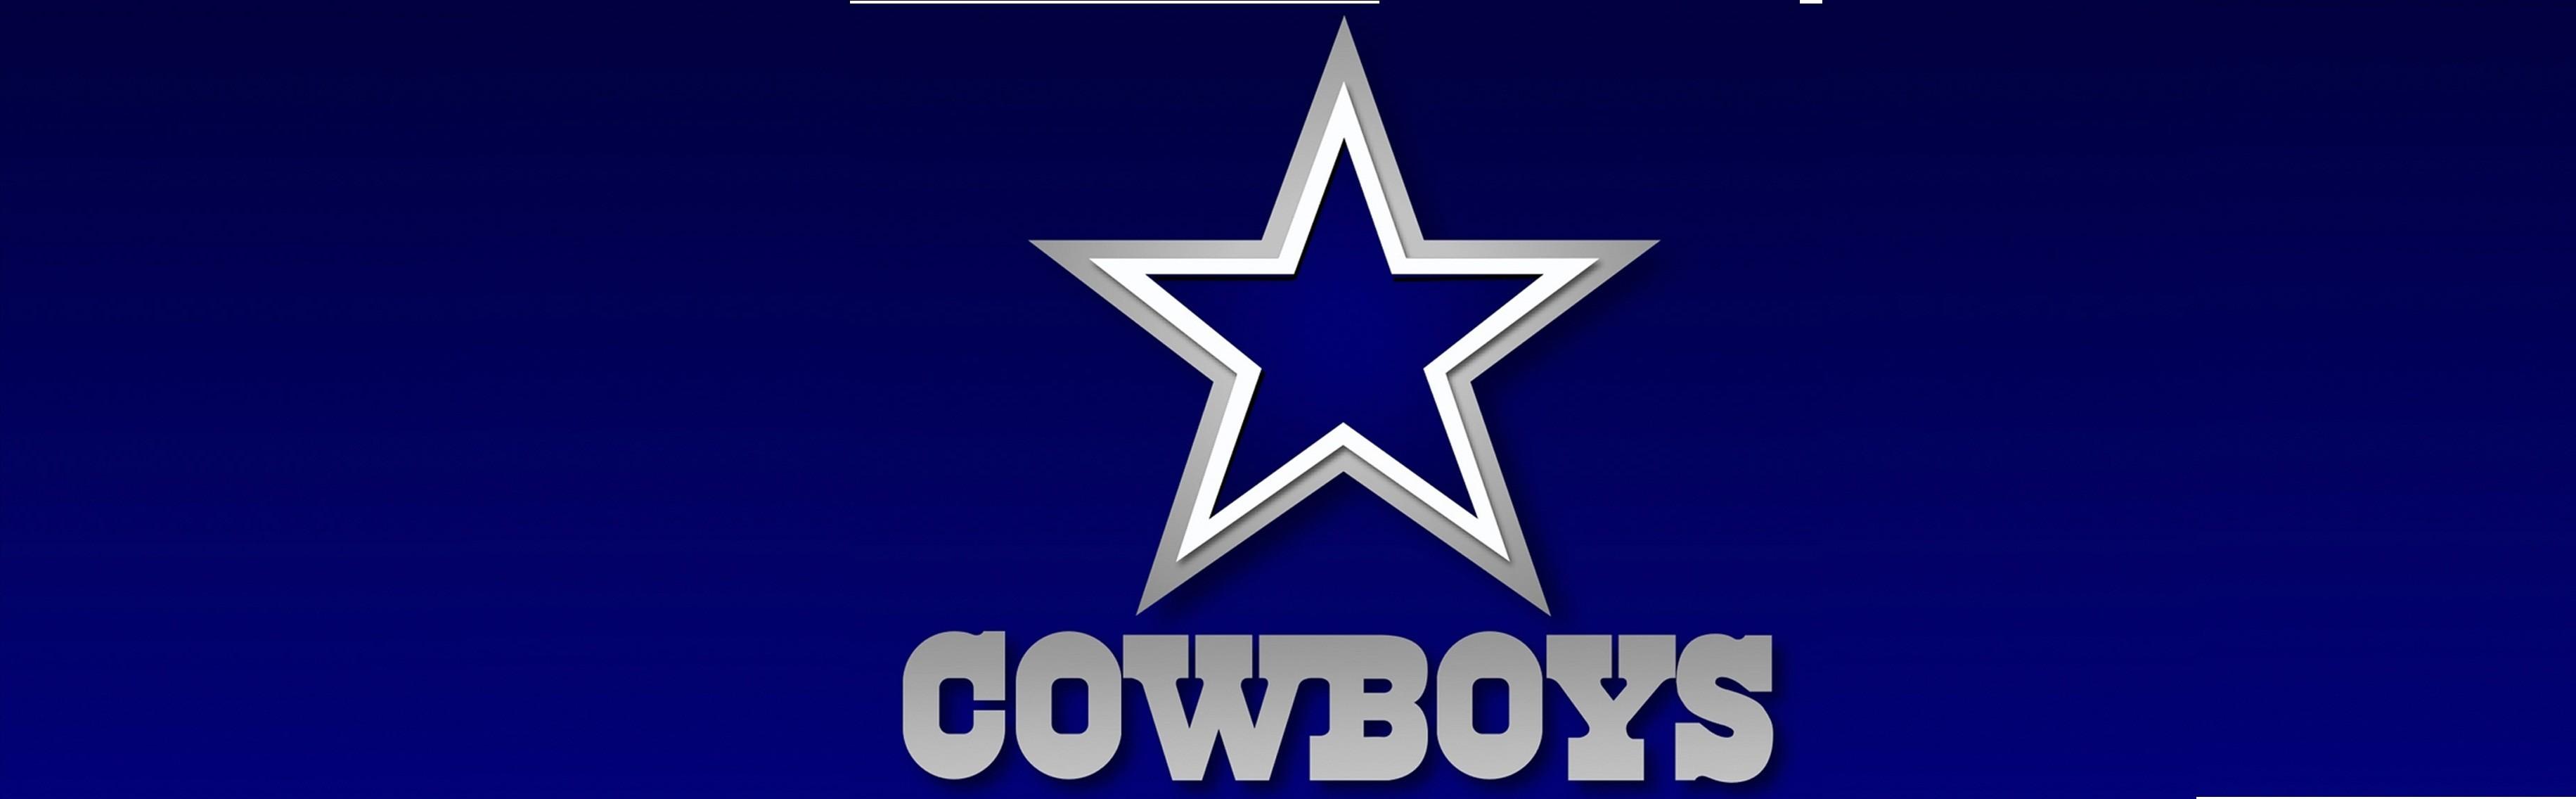 Dallas Cowboys Computer Wallpaper background picture